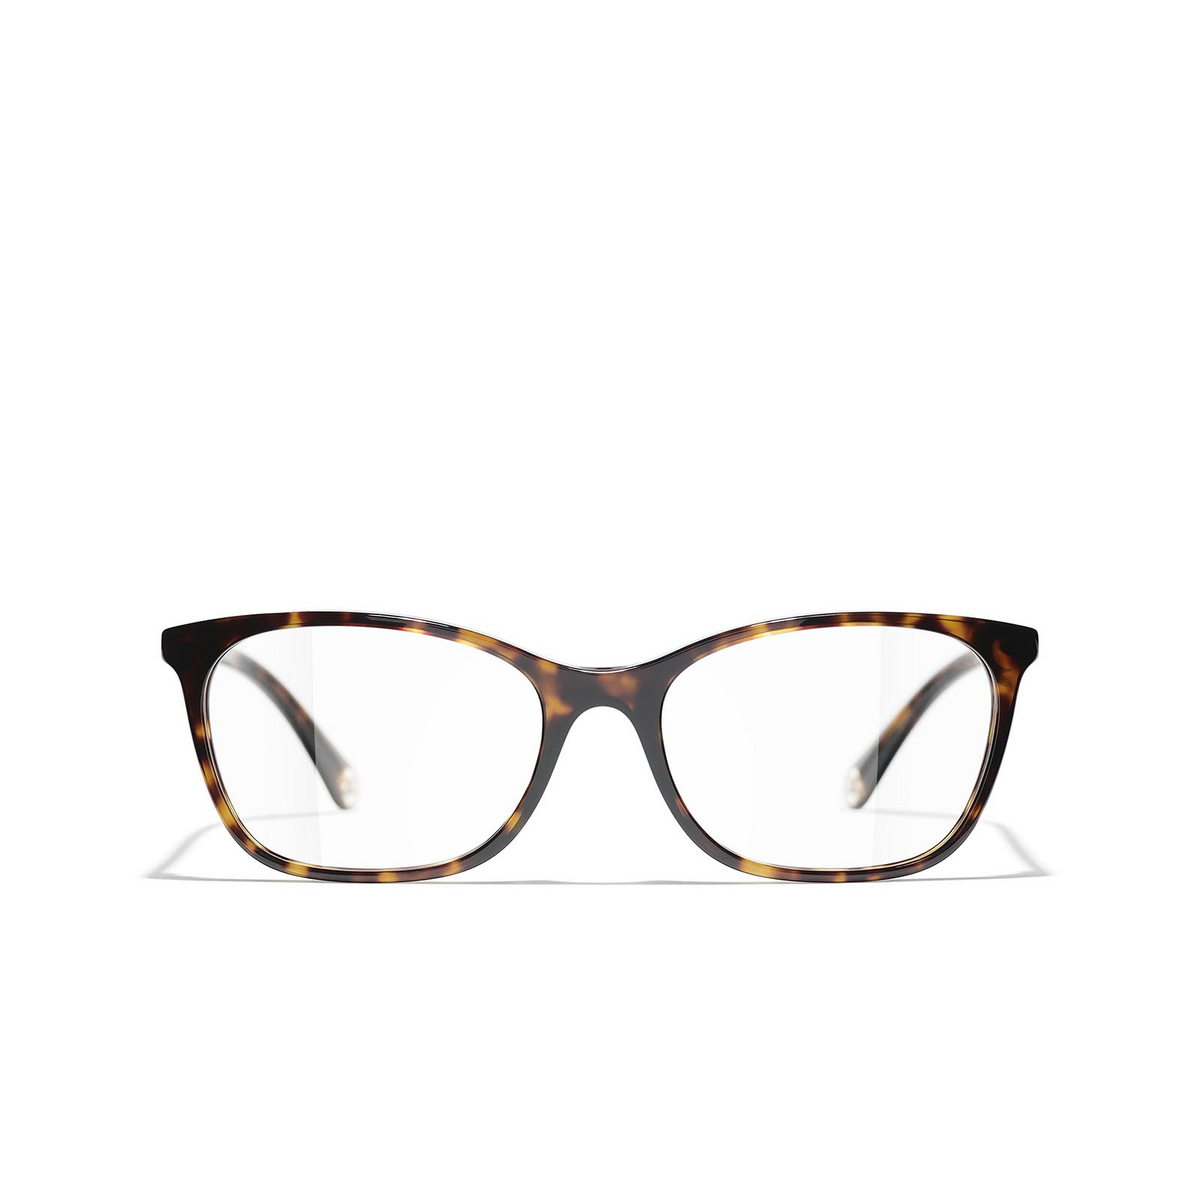 CHANEL rectangle Eyeglasses C714 Dark Tortoise - front view